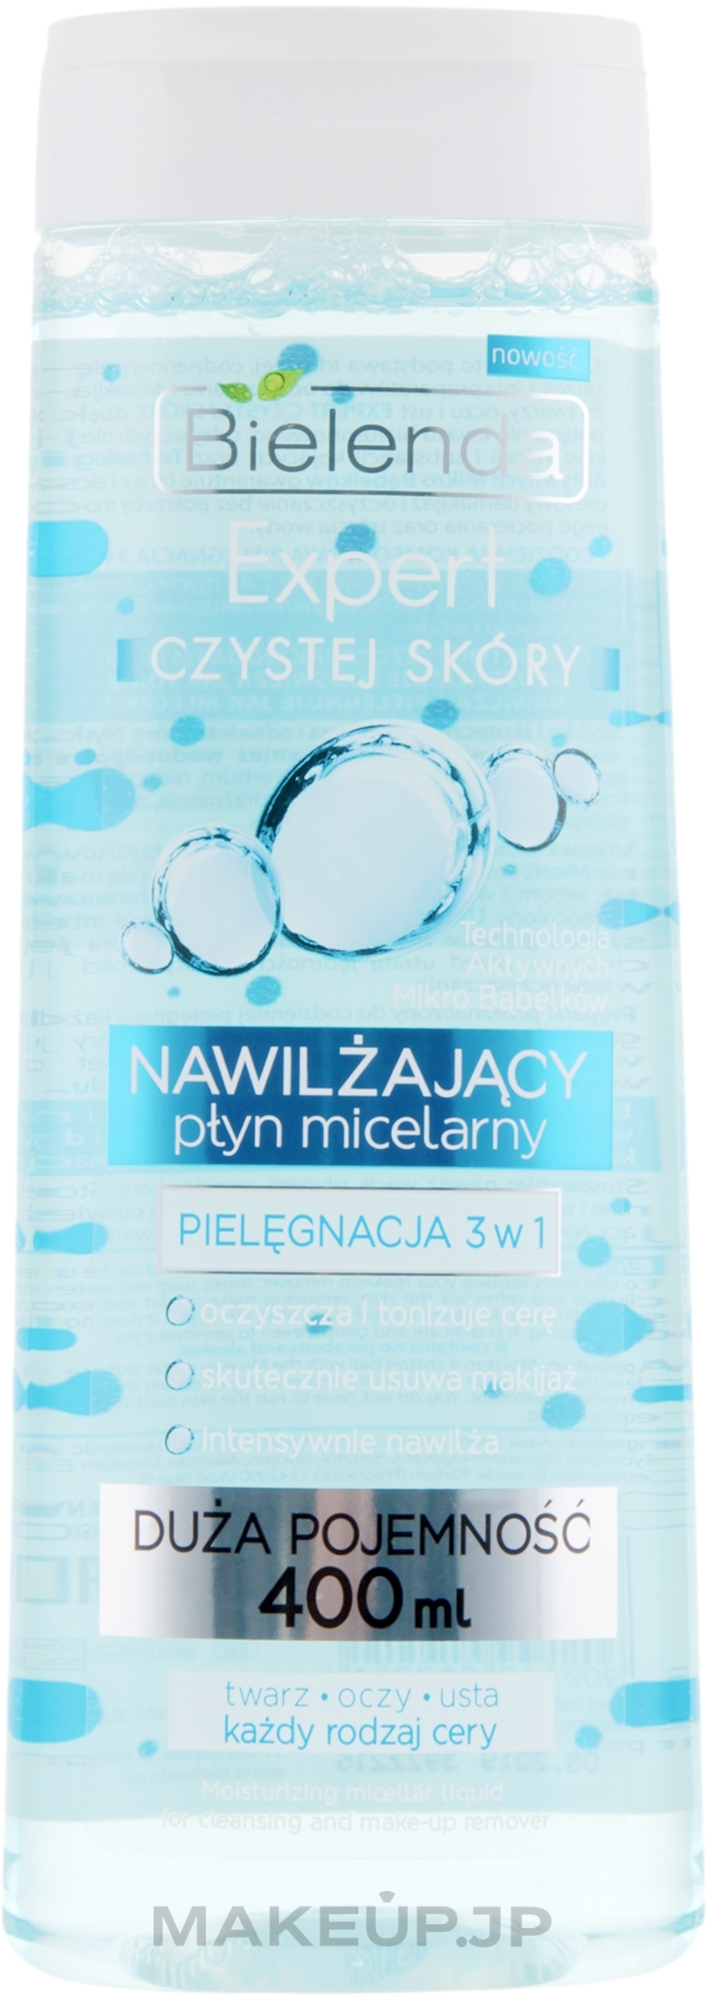 Moisturizing Micellar Water 3 in 1 - Bielenda Expert Czystej Skyry — photo 400 ml